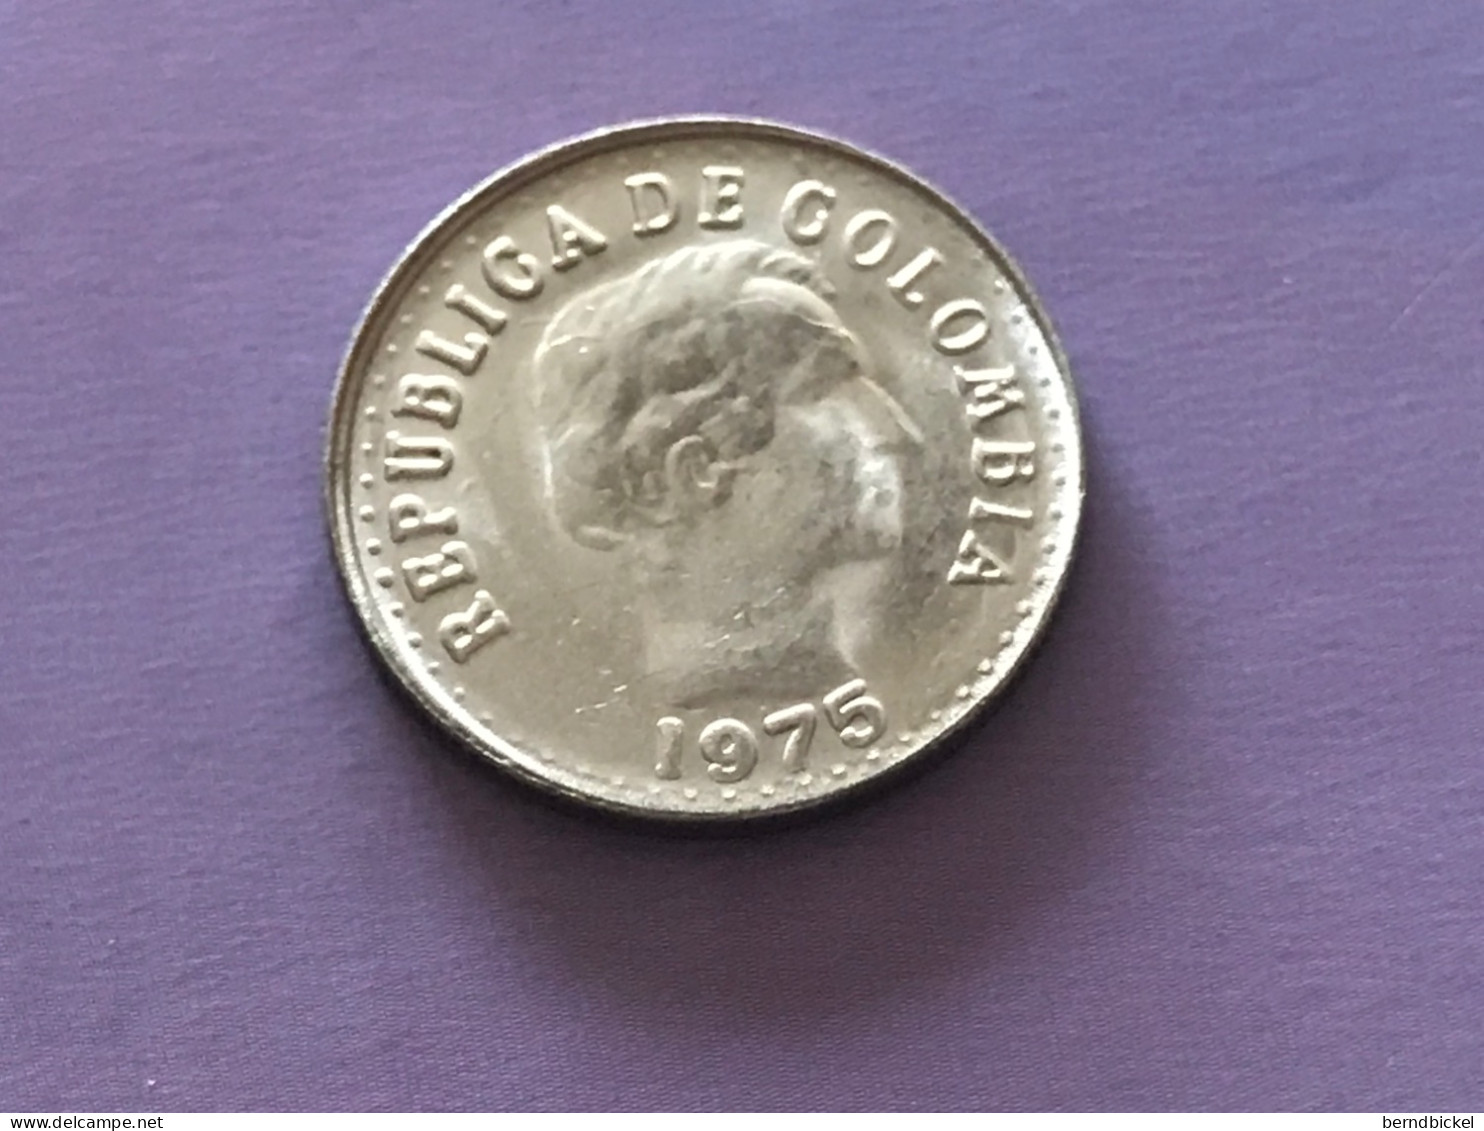 Münze Münzen Umlaufmünze Kolumbien 10 Centavos 1975 - Colombia